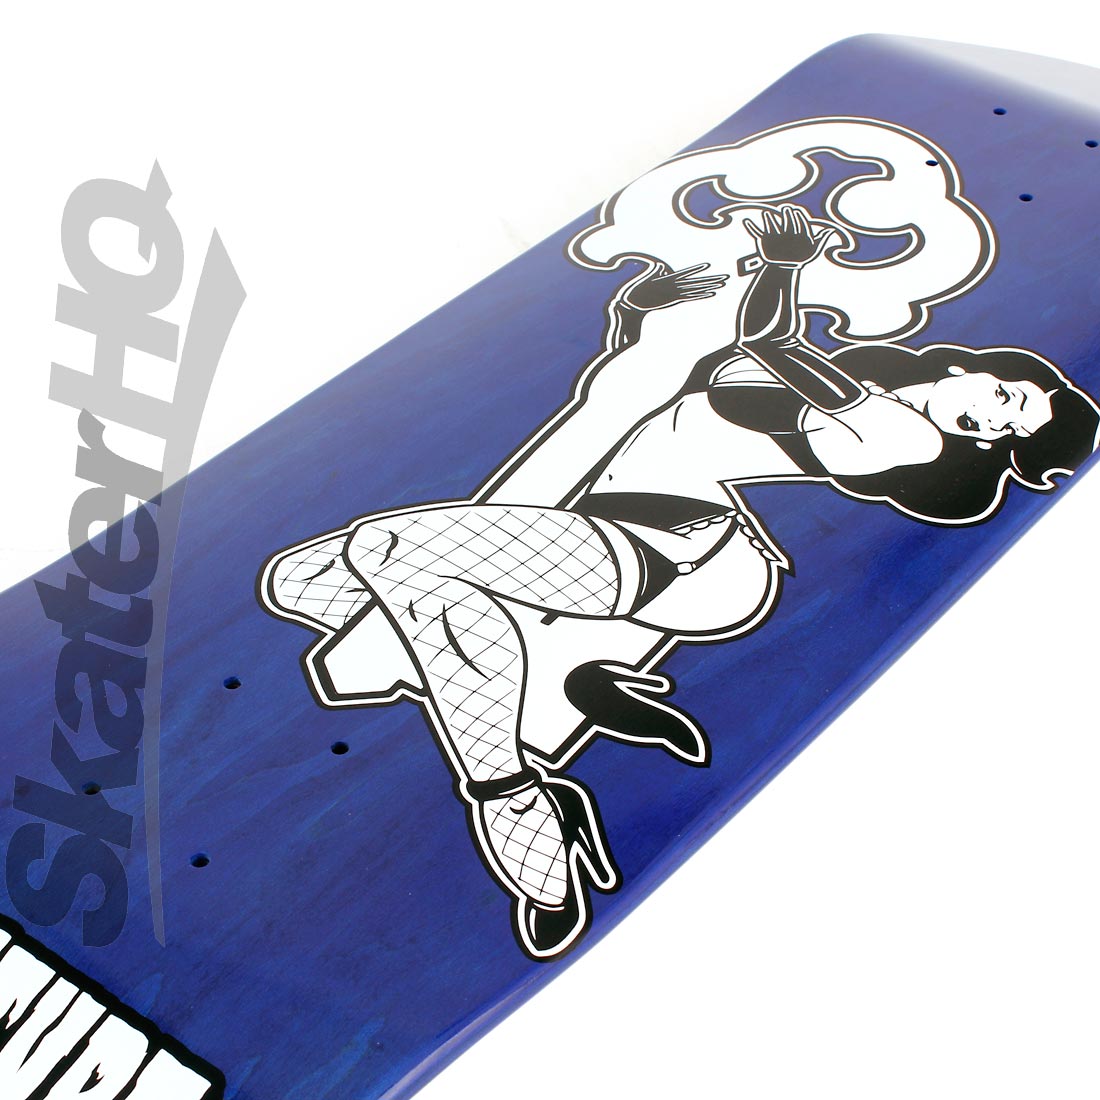 Creature Navs Key Holder II 8.8 Deck - Blue Skateboard Decks Old School